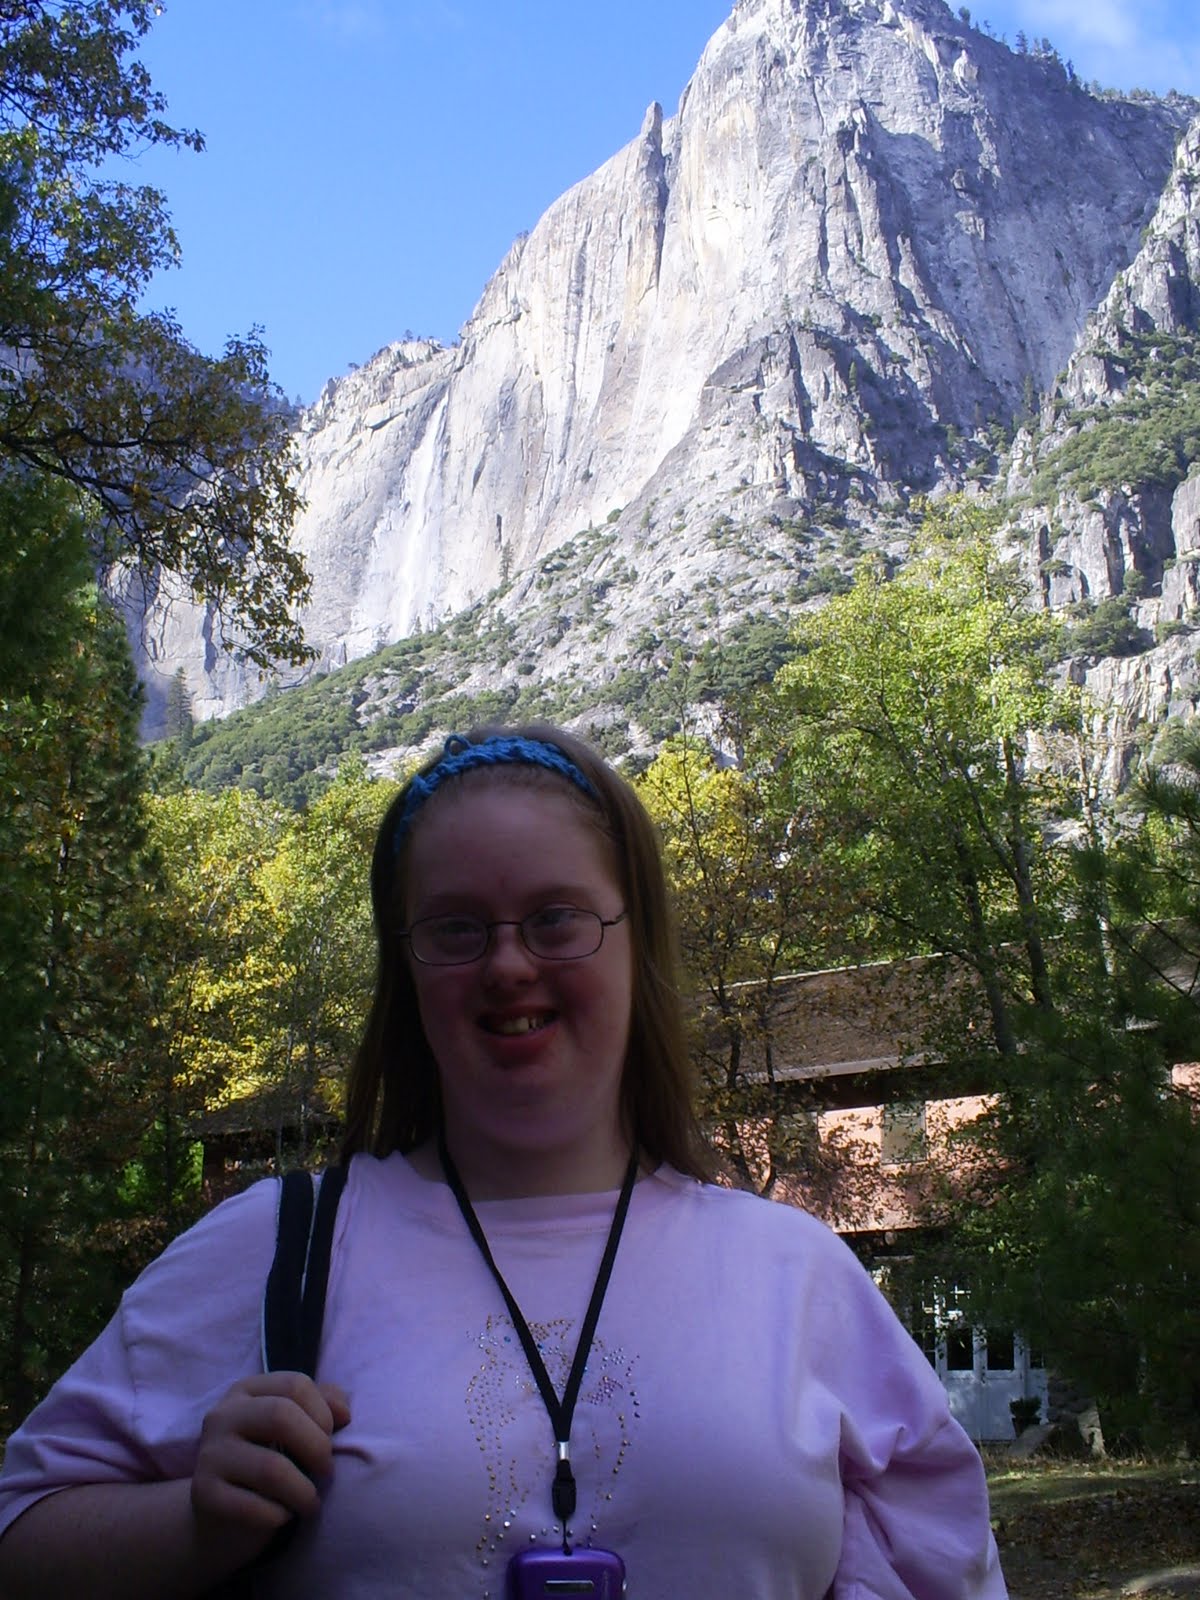 [Beth+at+Yosemite.JPG]